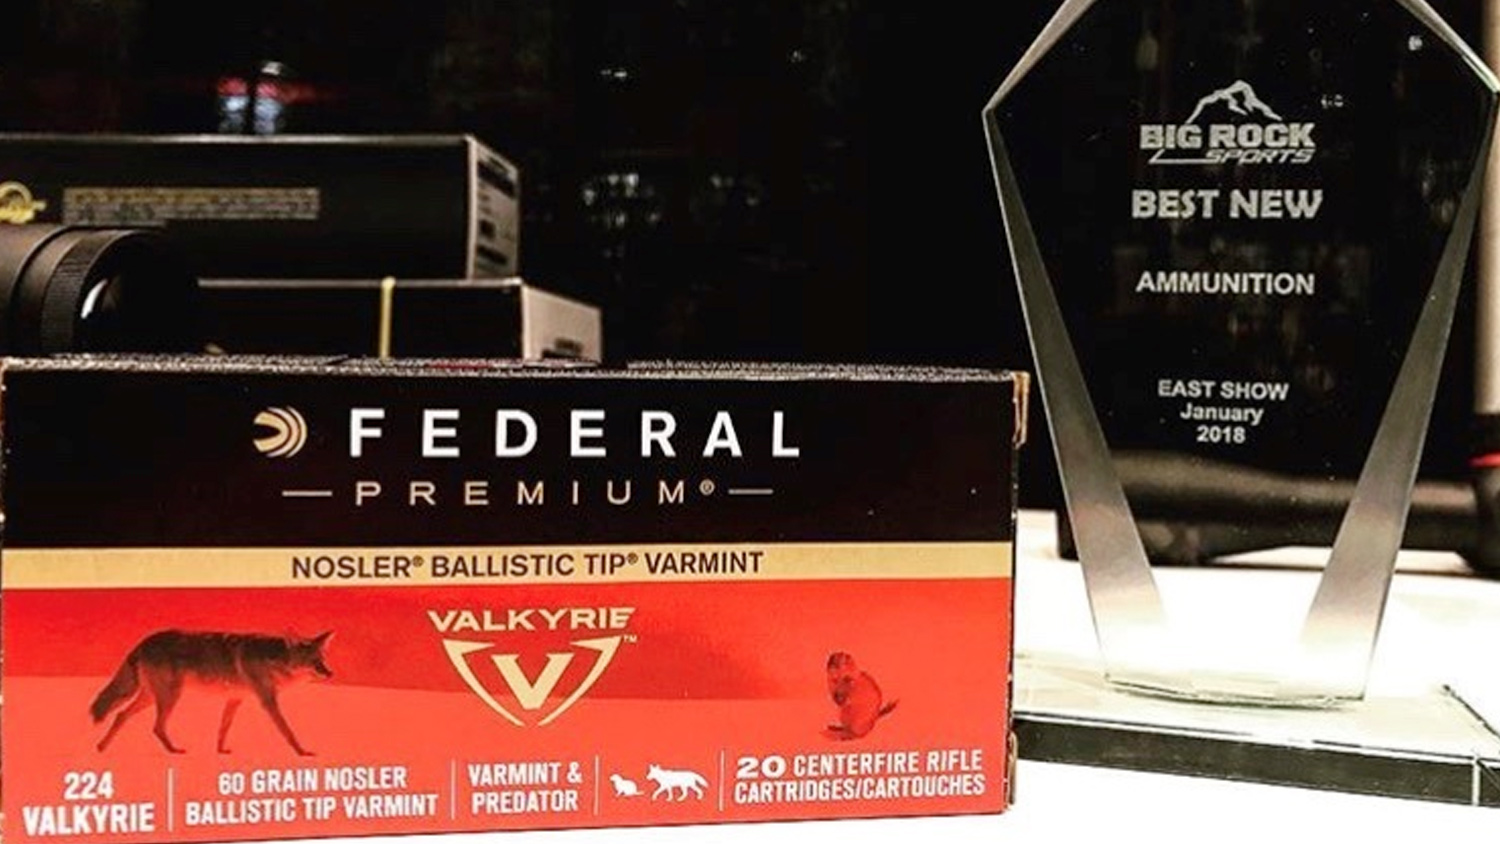 .224 Valkyrie cartridge wins award